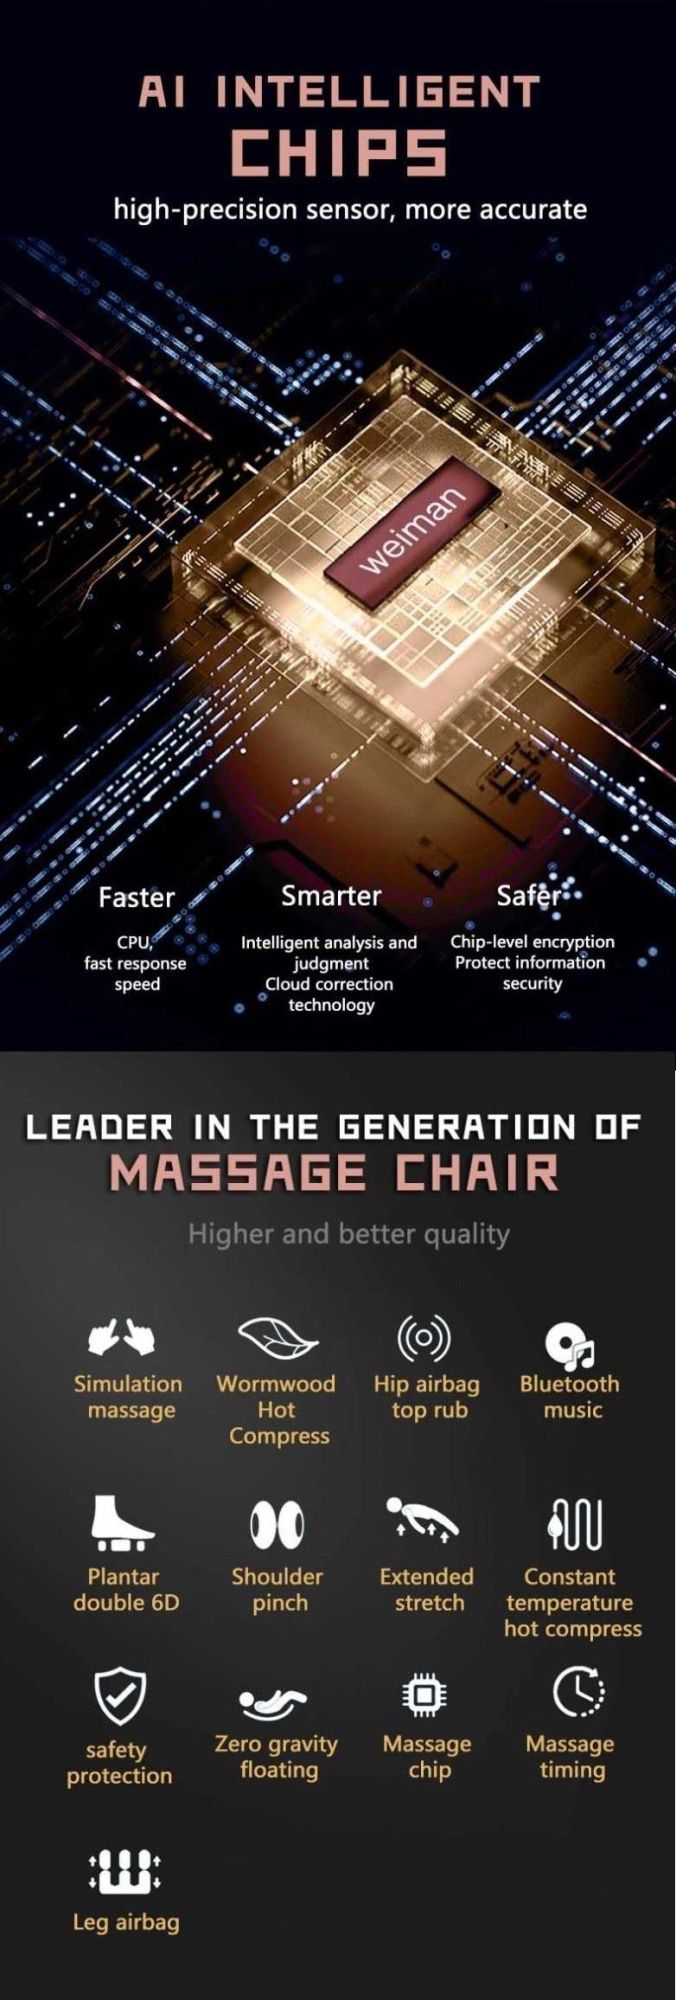 Cheap Full Body Massager Zero Gravity Mini Wide 8 Roller Luxury Electric Massage Chair Price